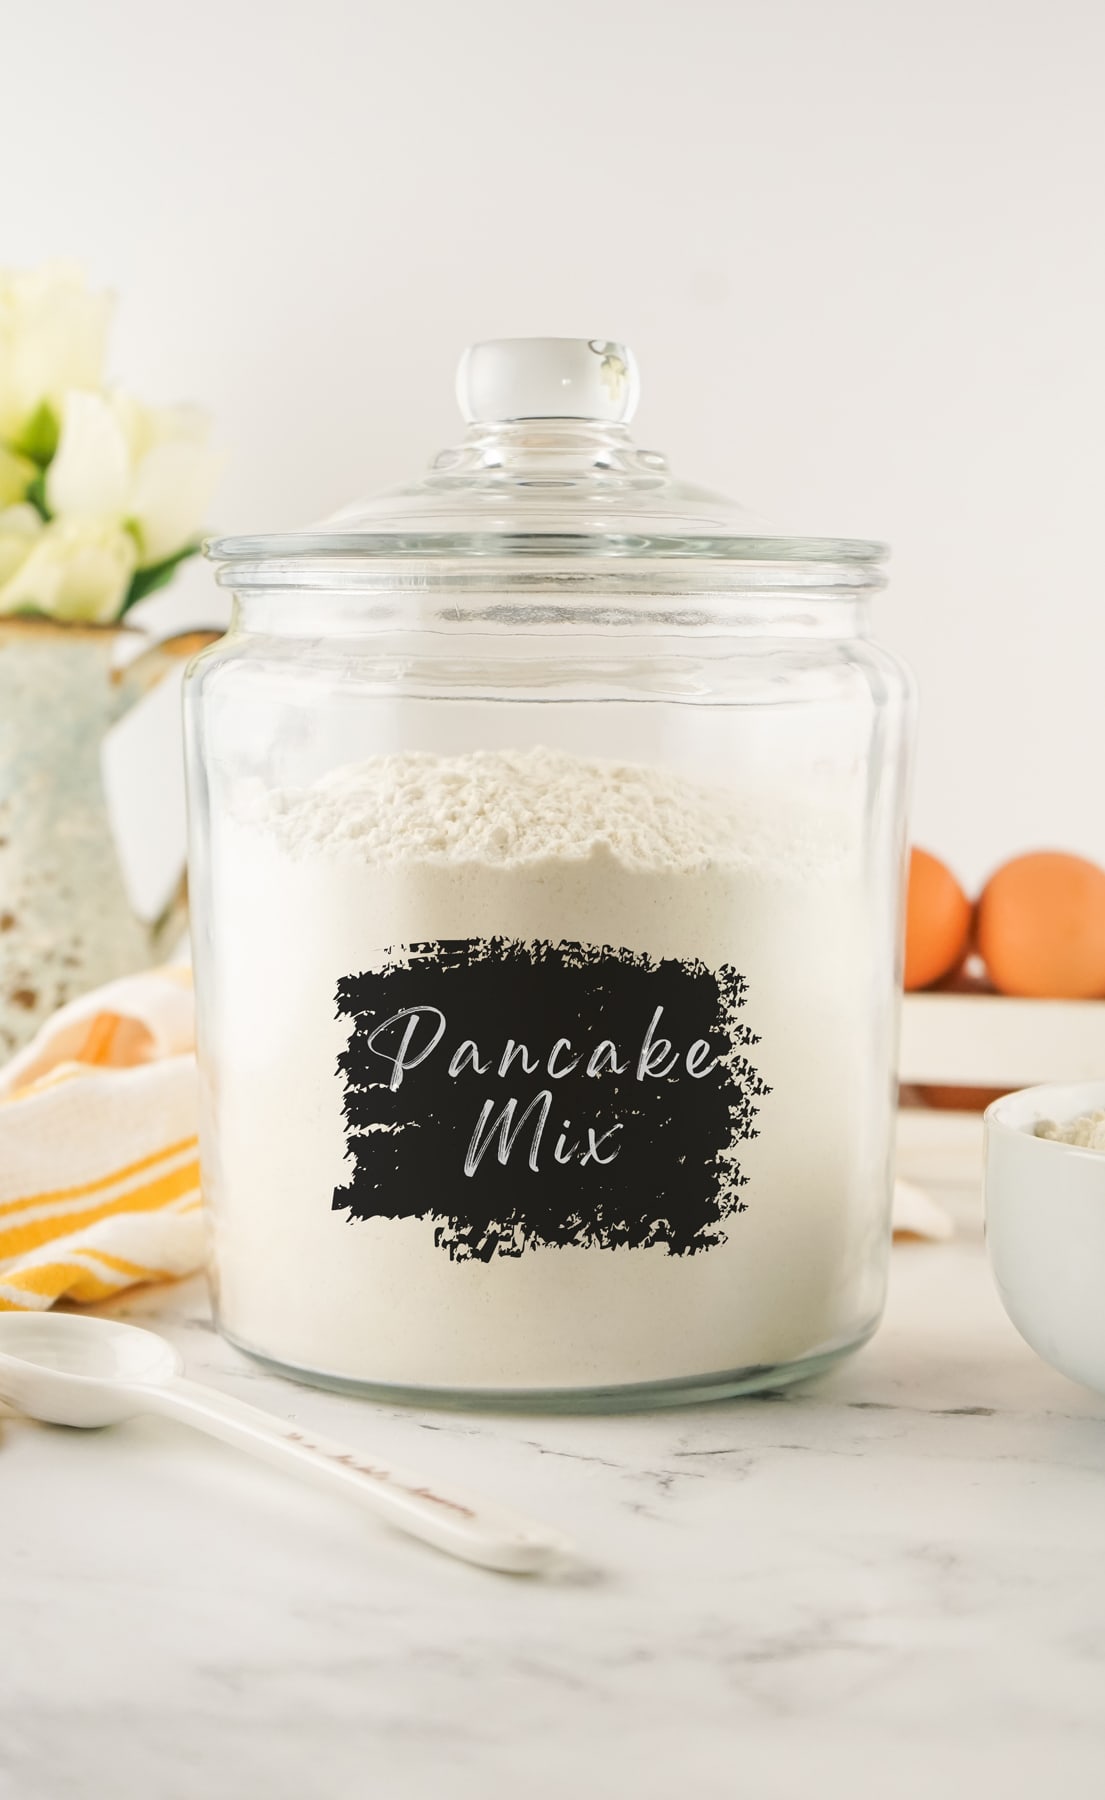 A jar of pancake mix with a chalkboard label